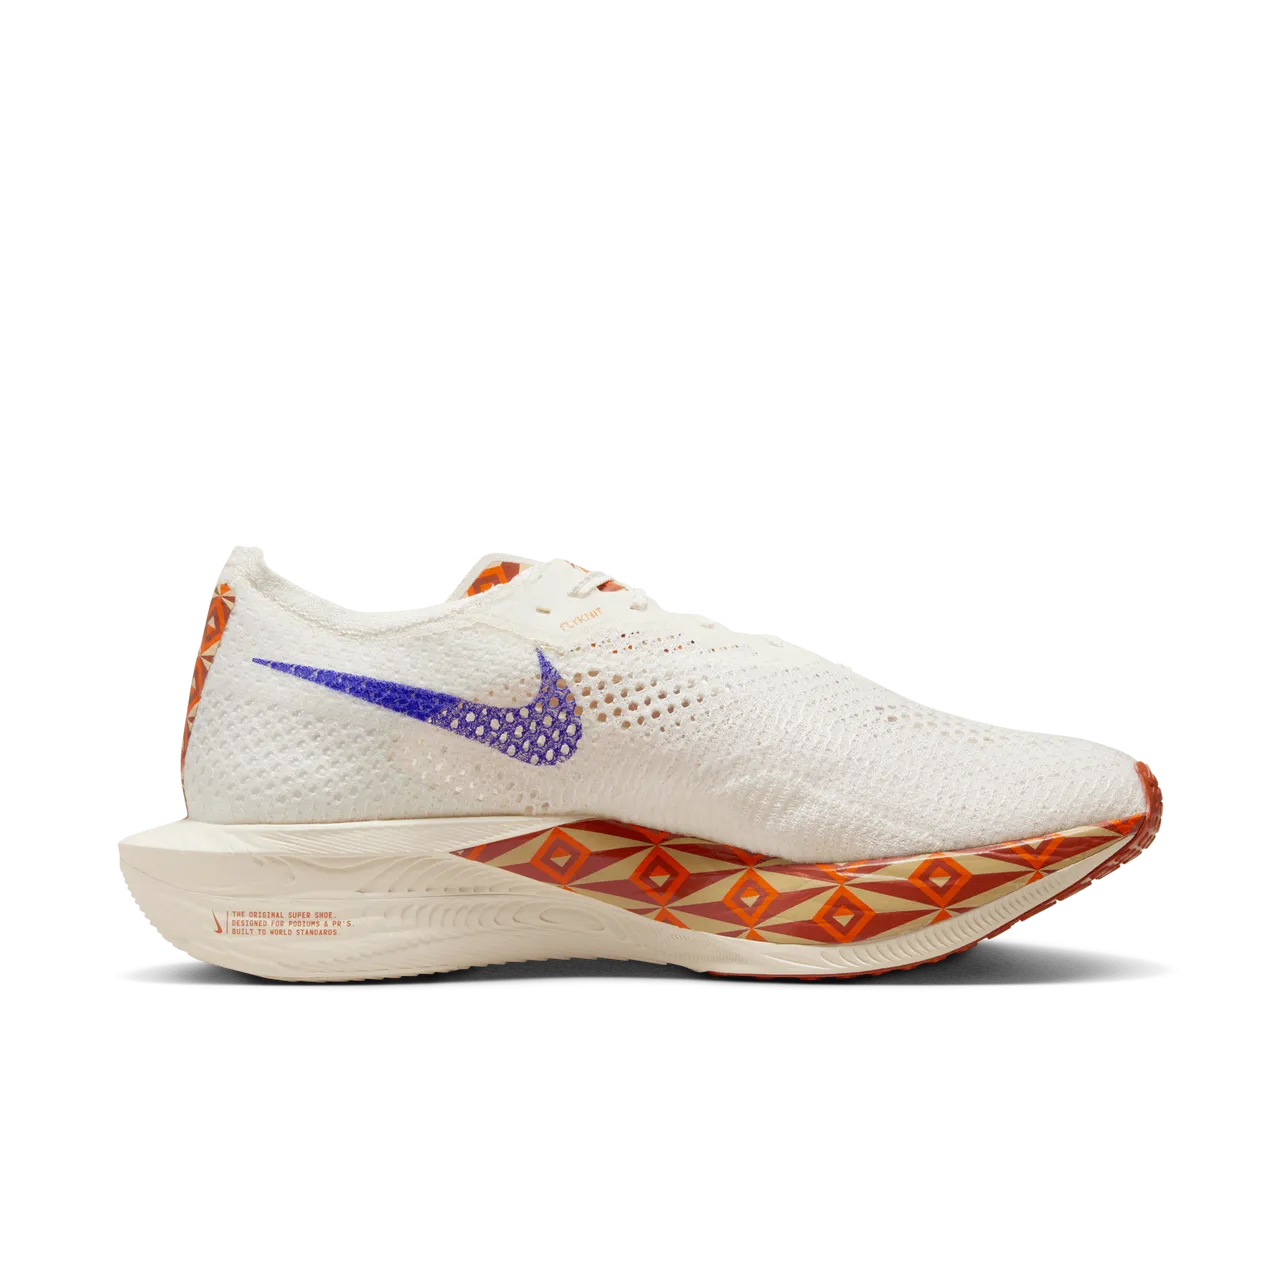 Nike Vaporfly 3 Premium Men's Road Racing Shoes - White